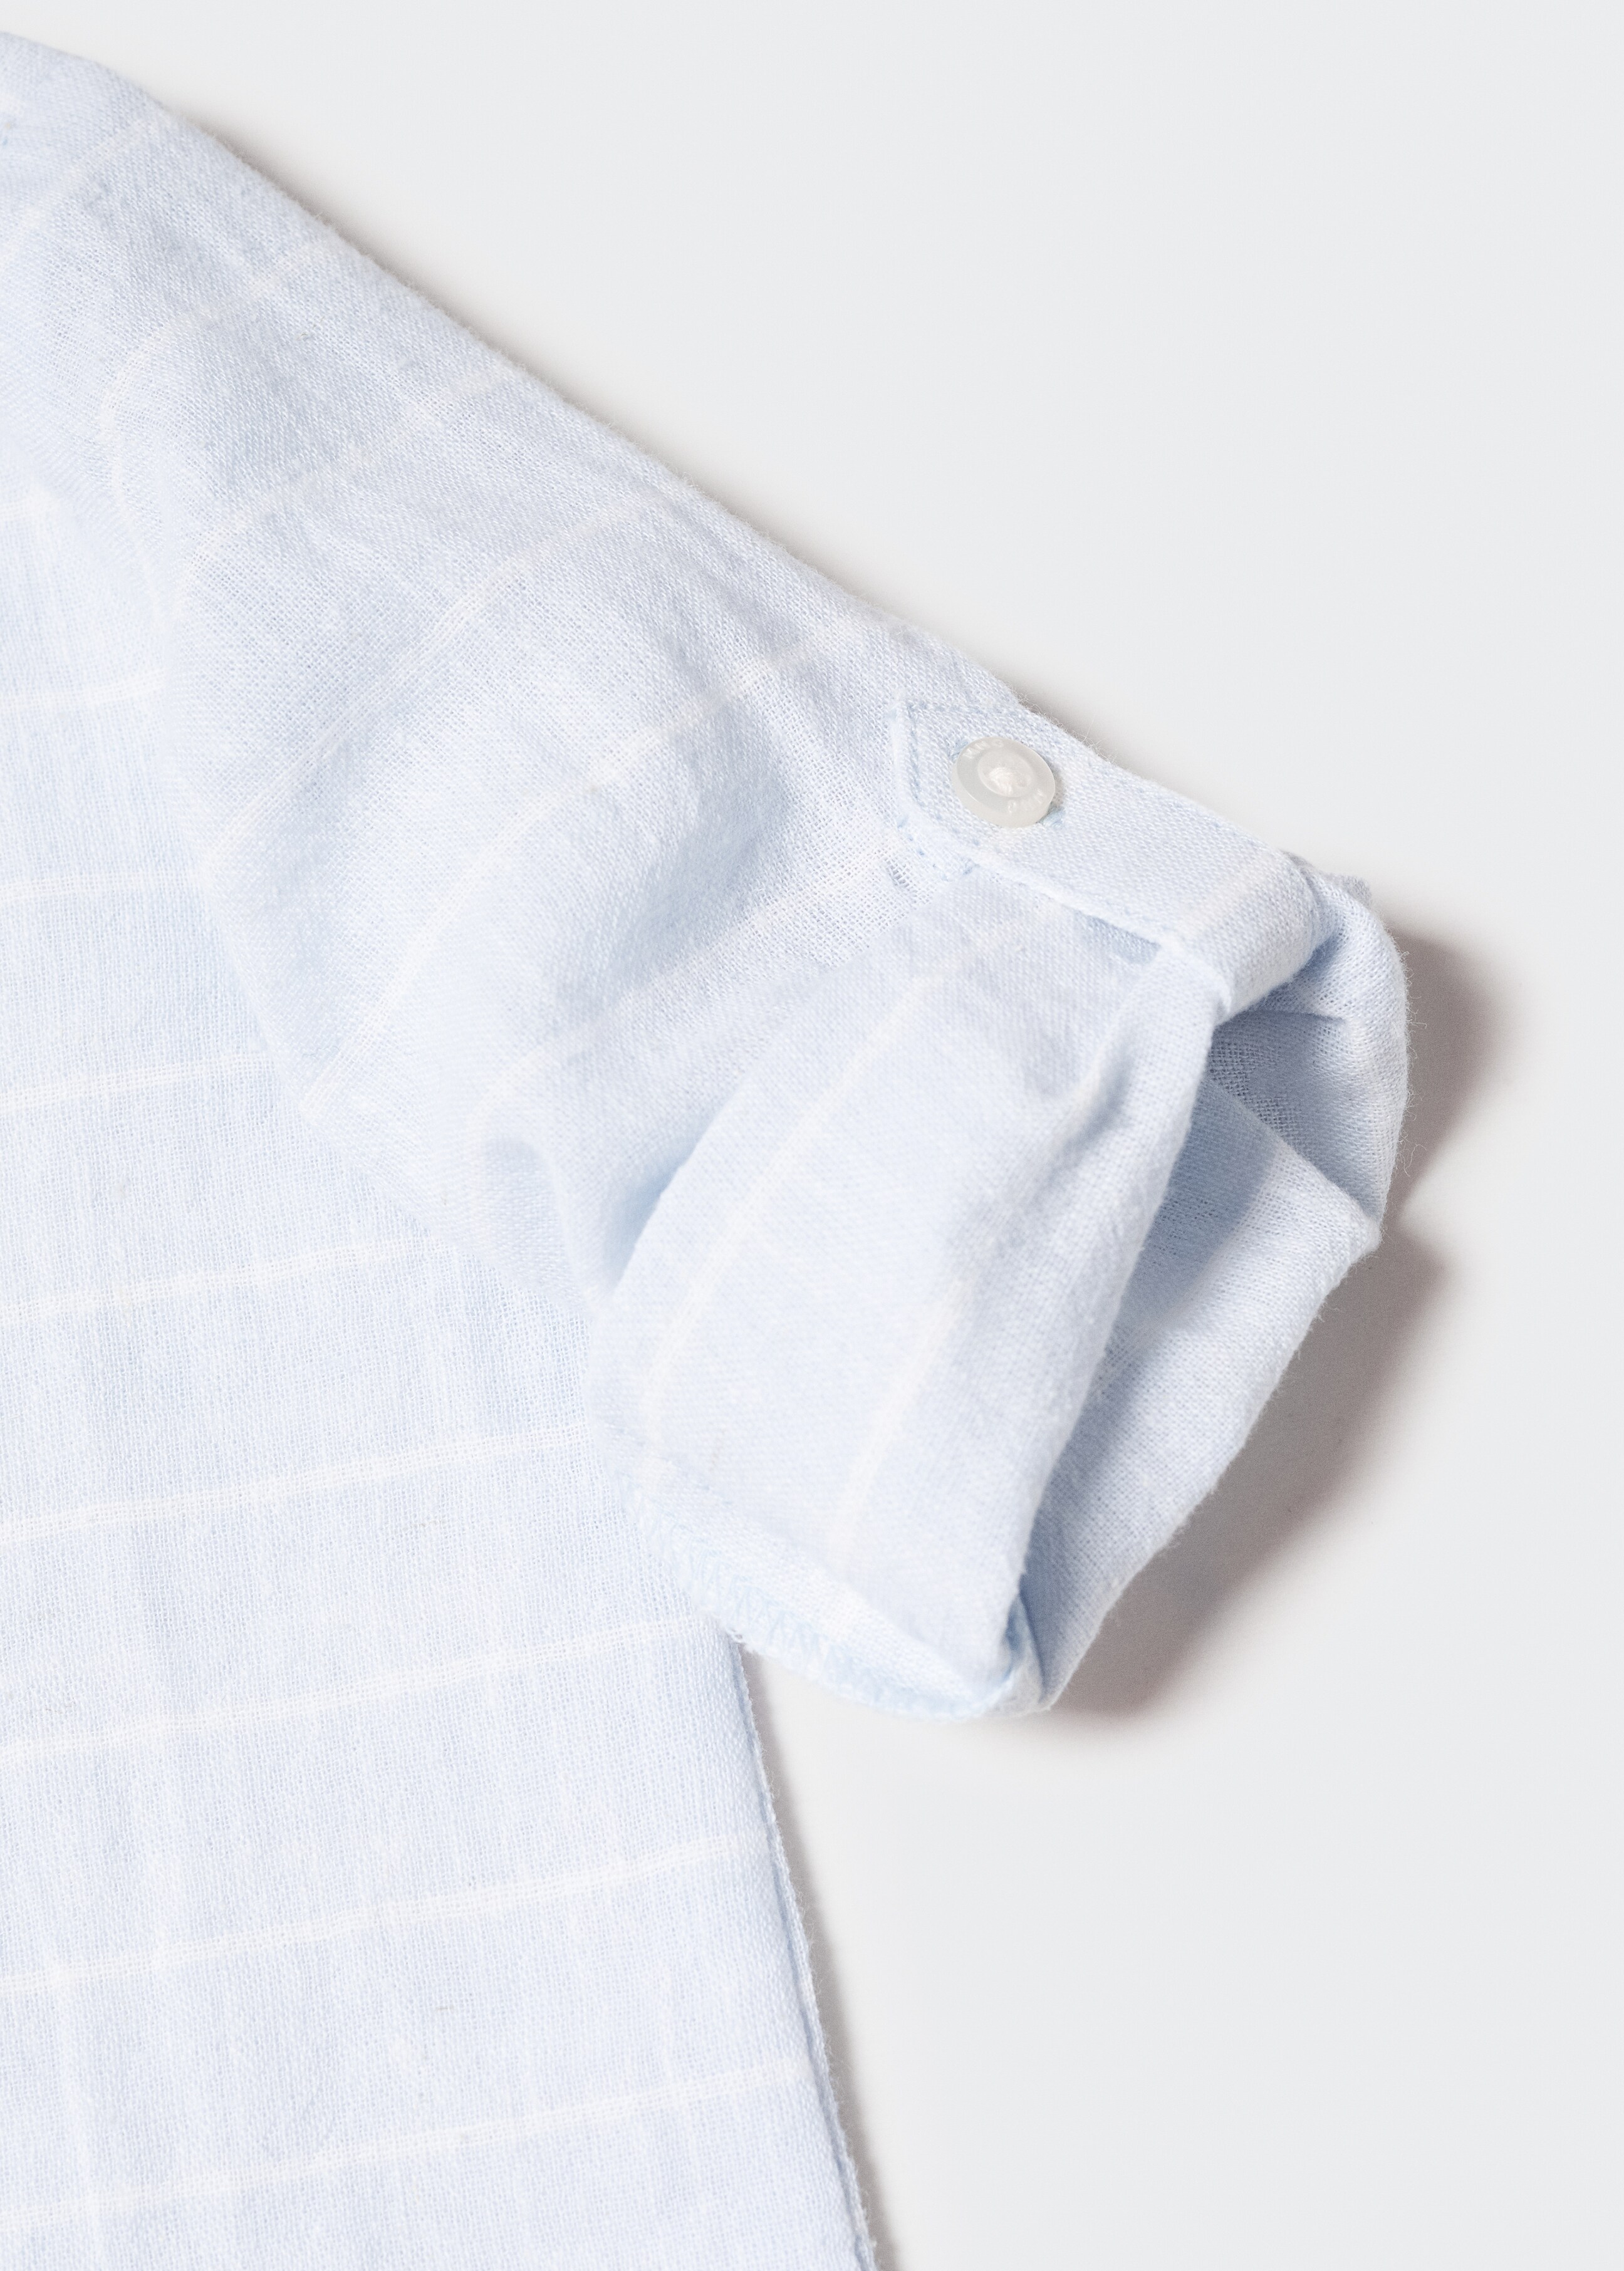 Striped cotton linen shirt - Details of the article 0